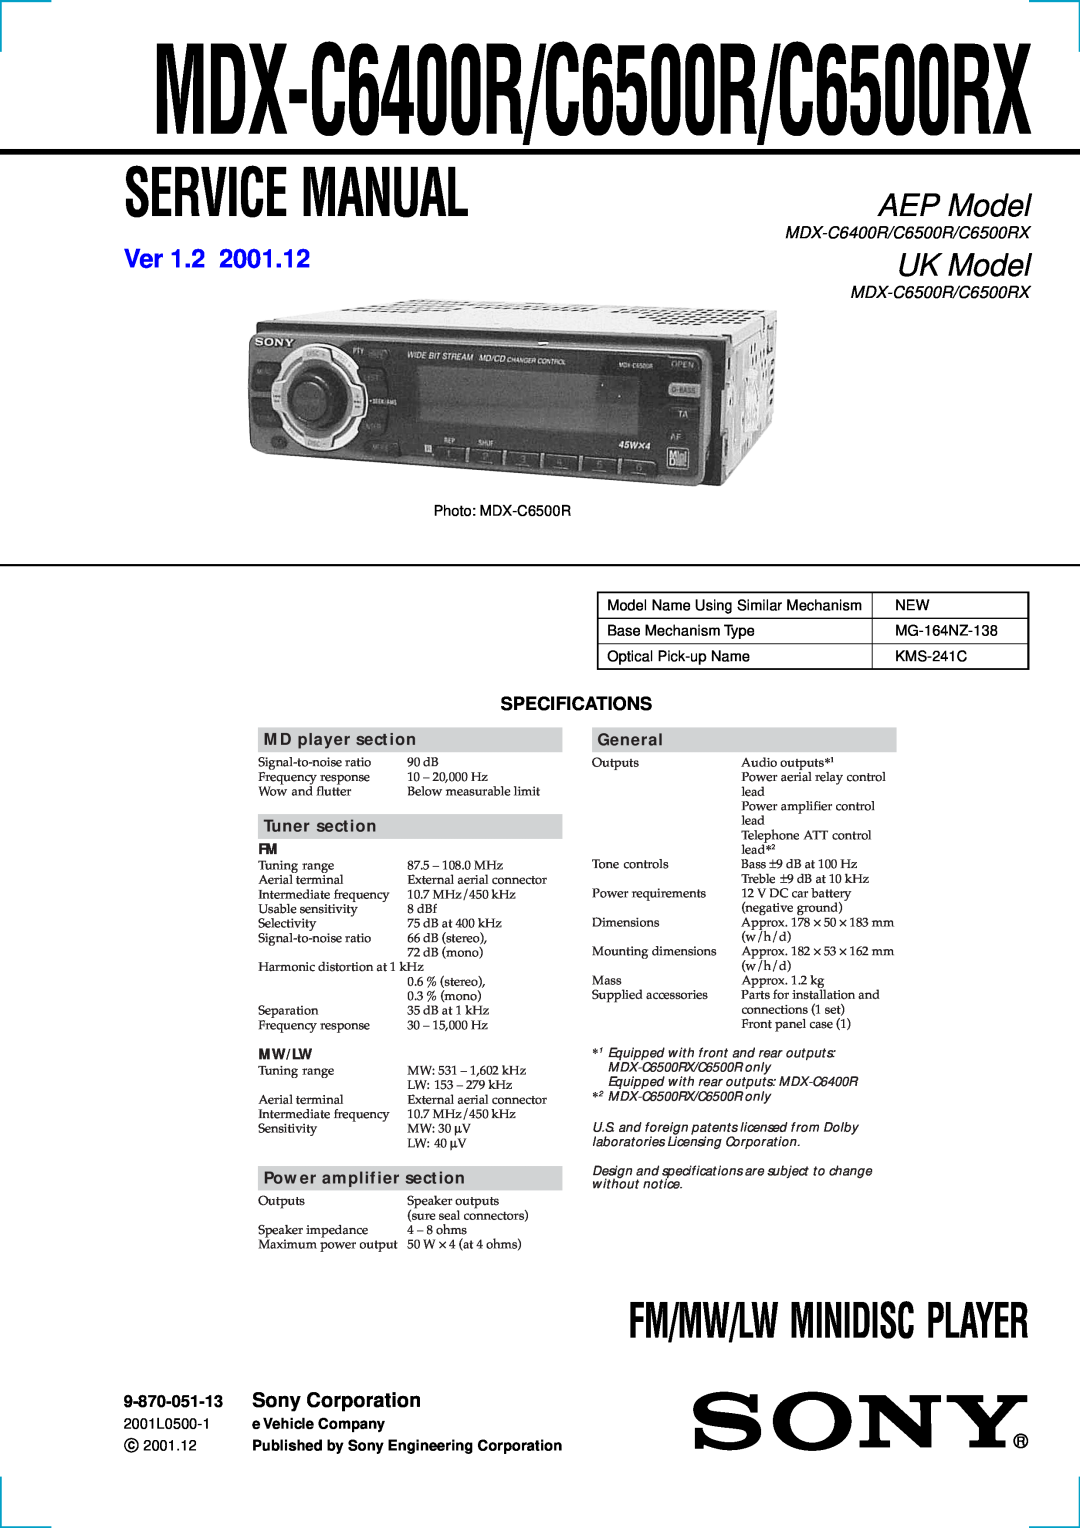 Sony MDX-C6500R service manual Specifications, MDX-C6400R/C6500R/C6500RX, Fm/Mw/Lw Minidisc Player, AEP Model, UK Model 